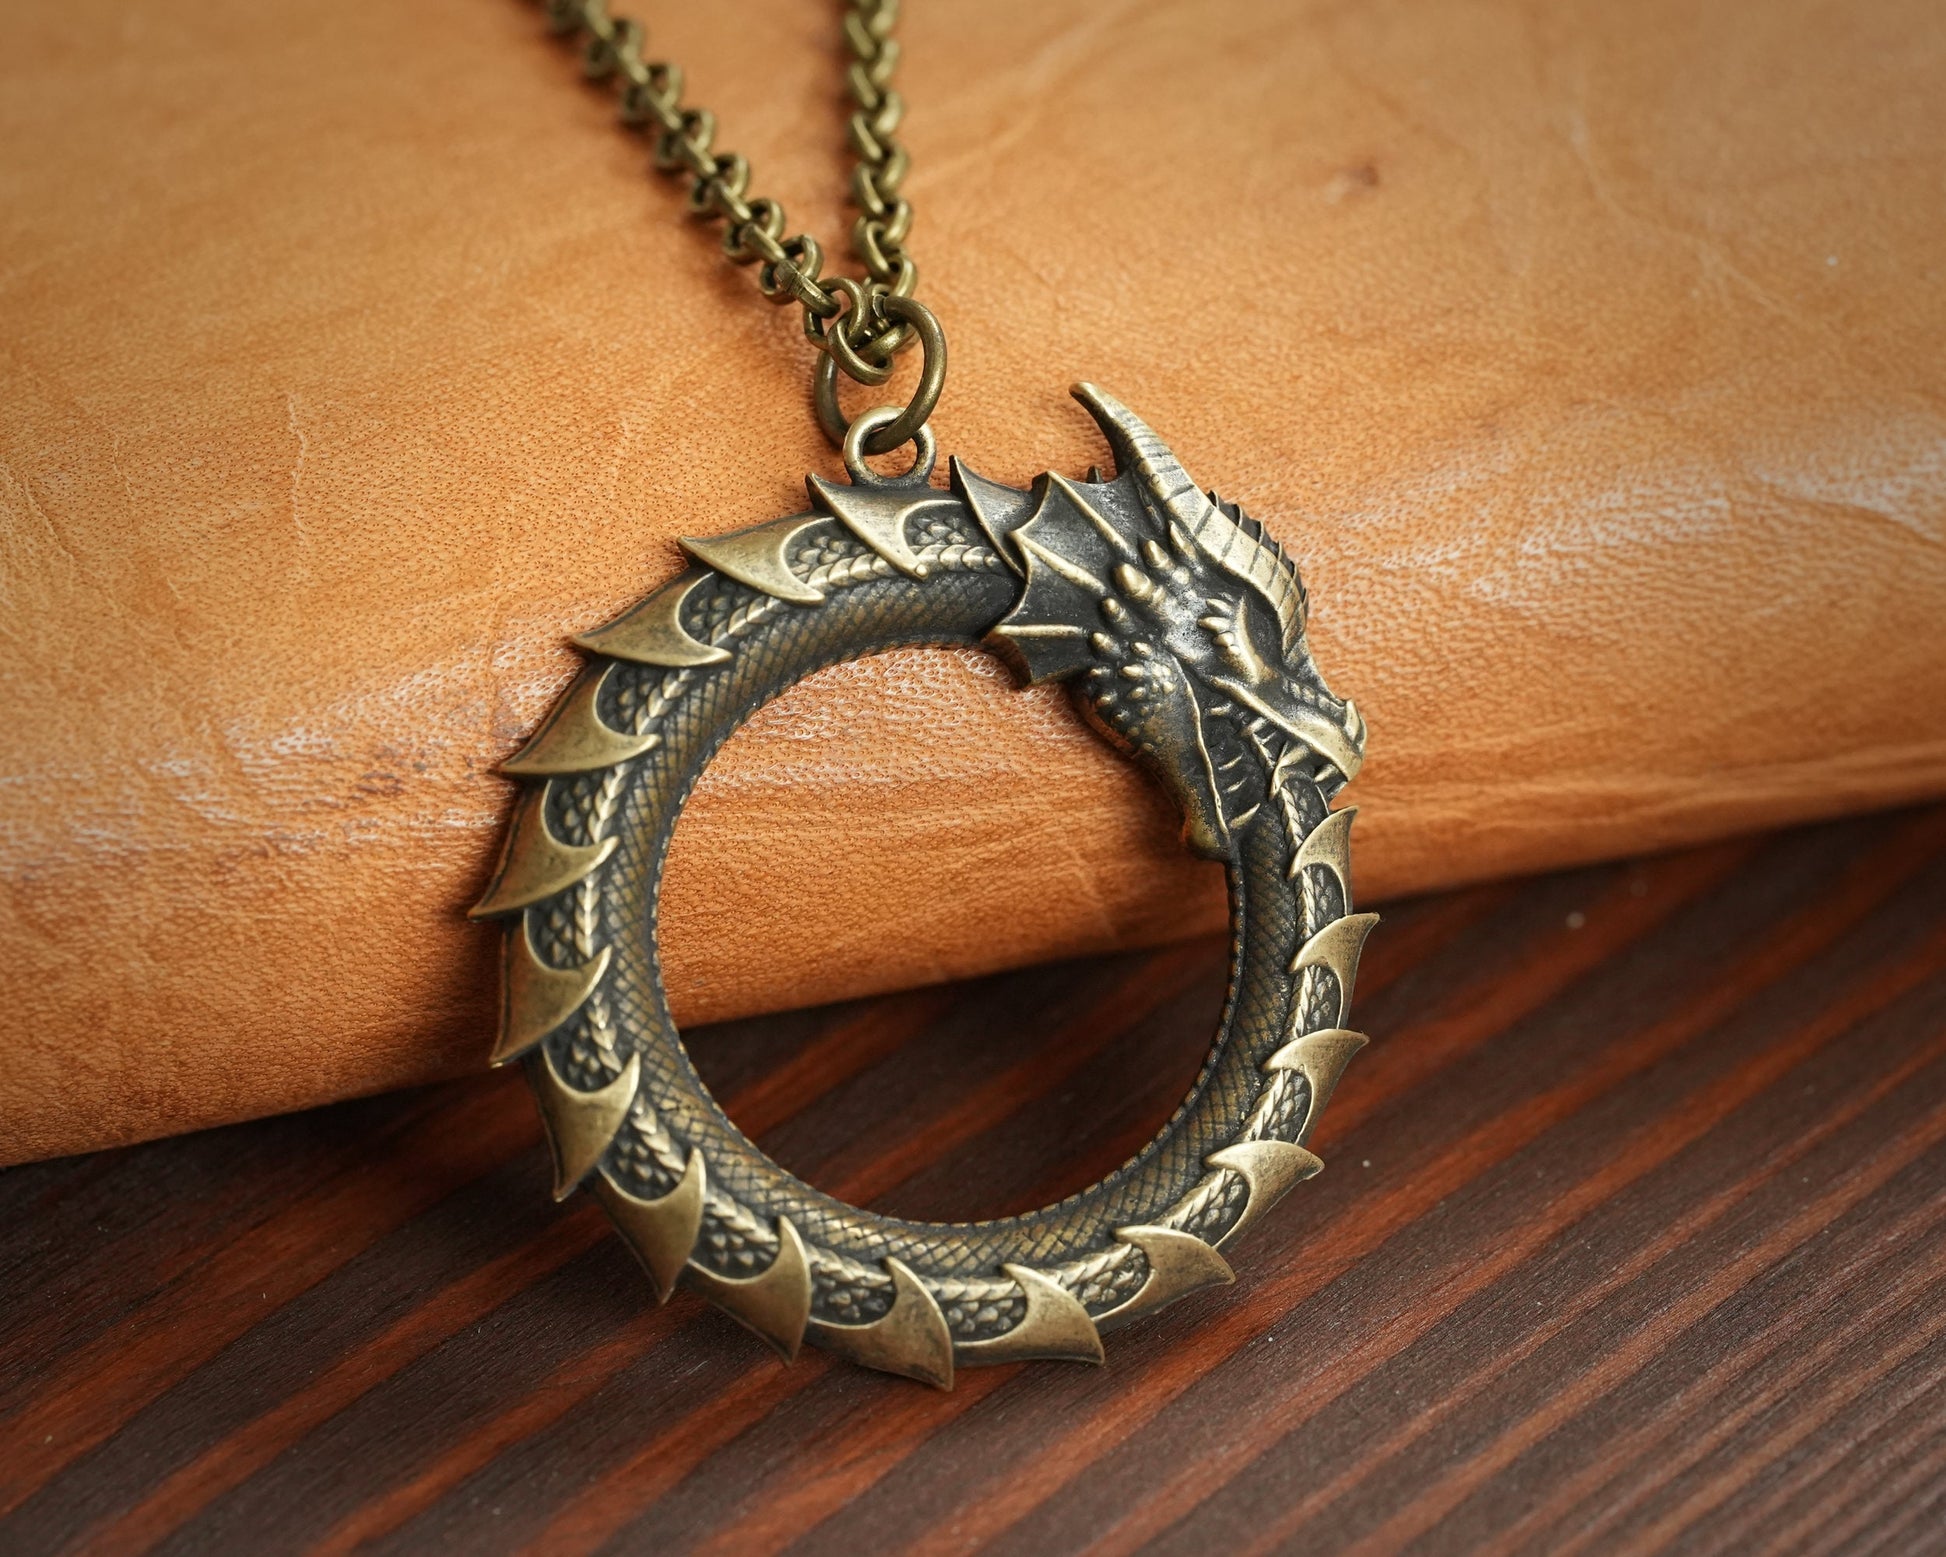 Ouroboros Dragon Snake Viking Pendant Necklace Amulet Charm With Chain - Baldur Jewelry